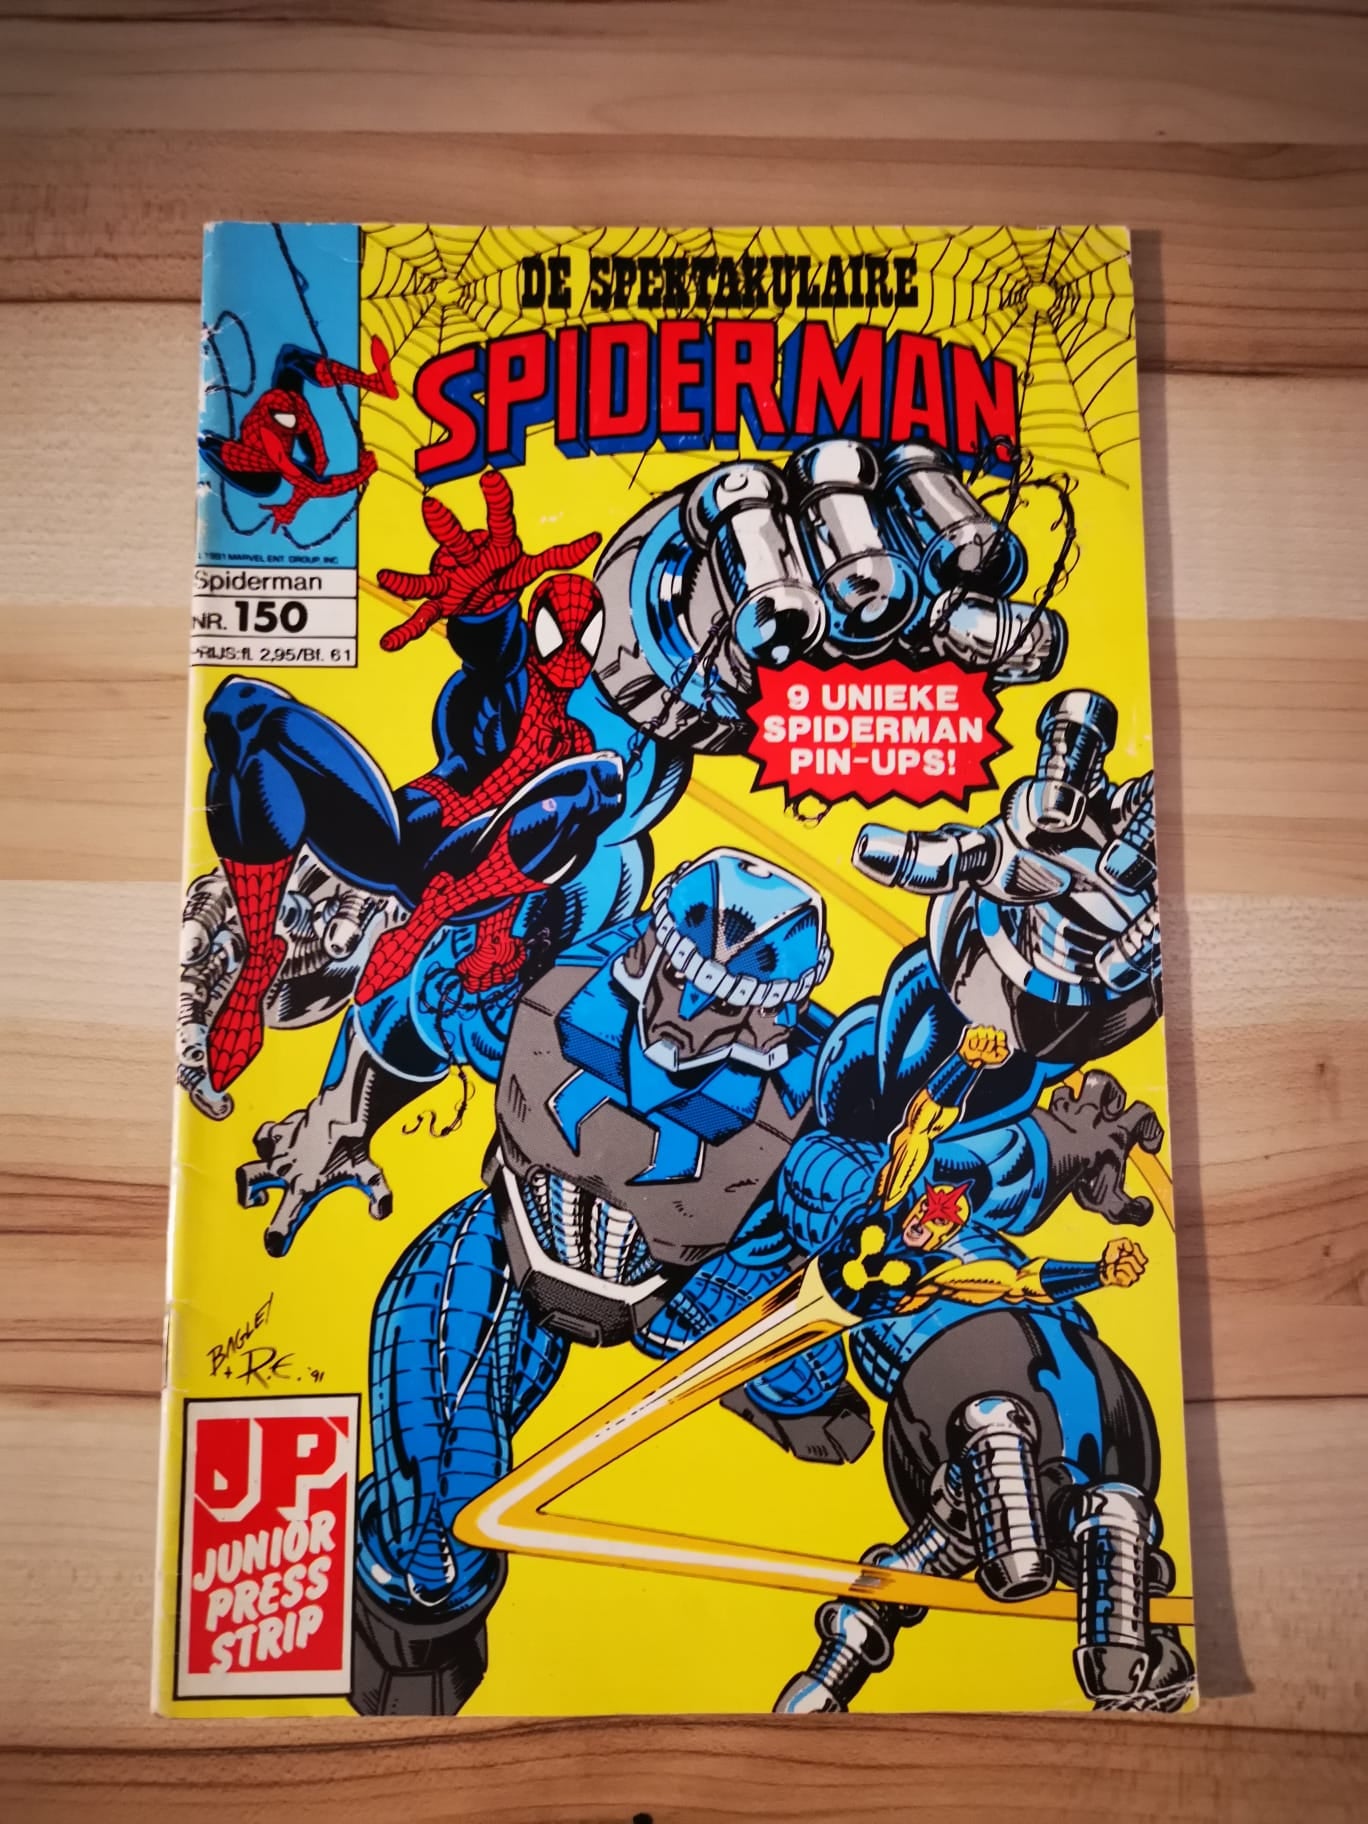 De spektakulaire spiderman #150